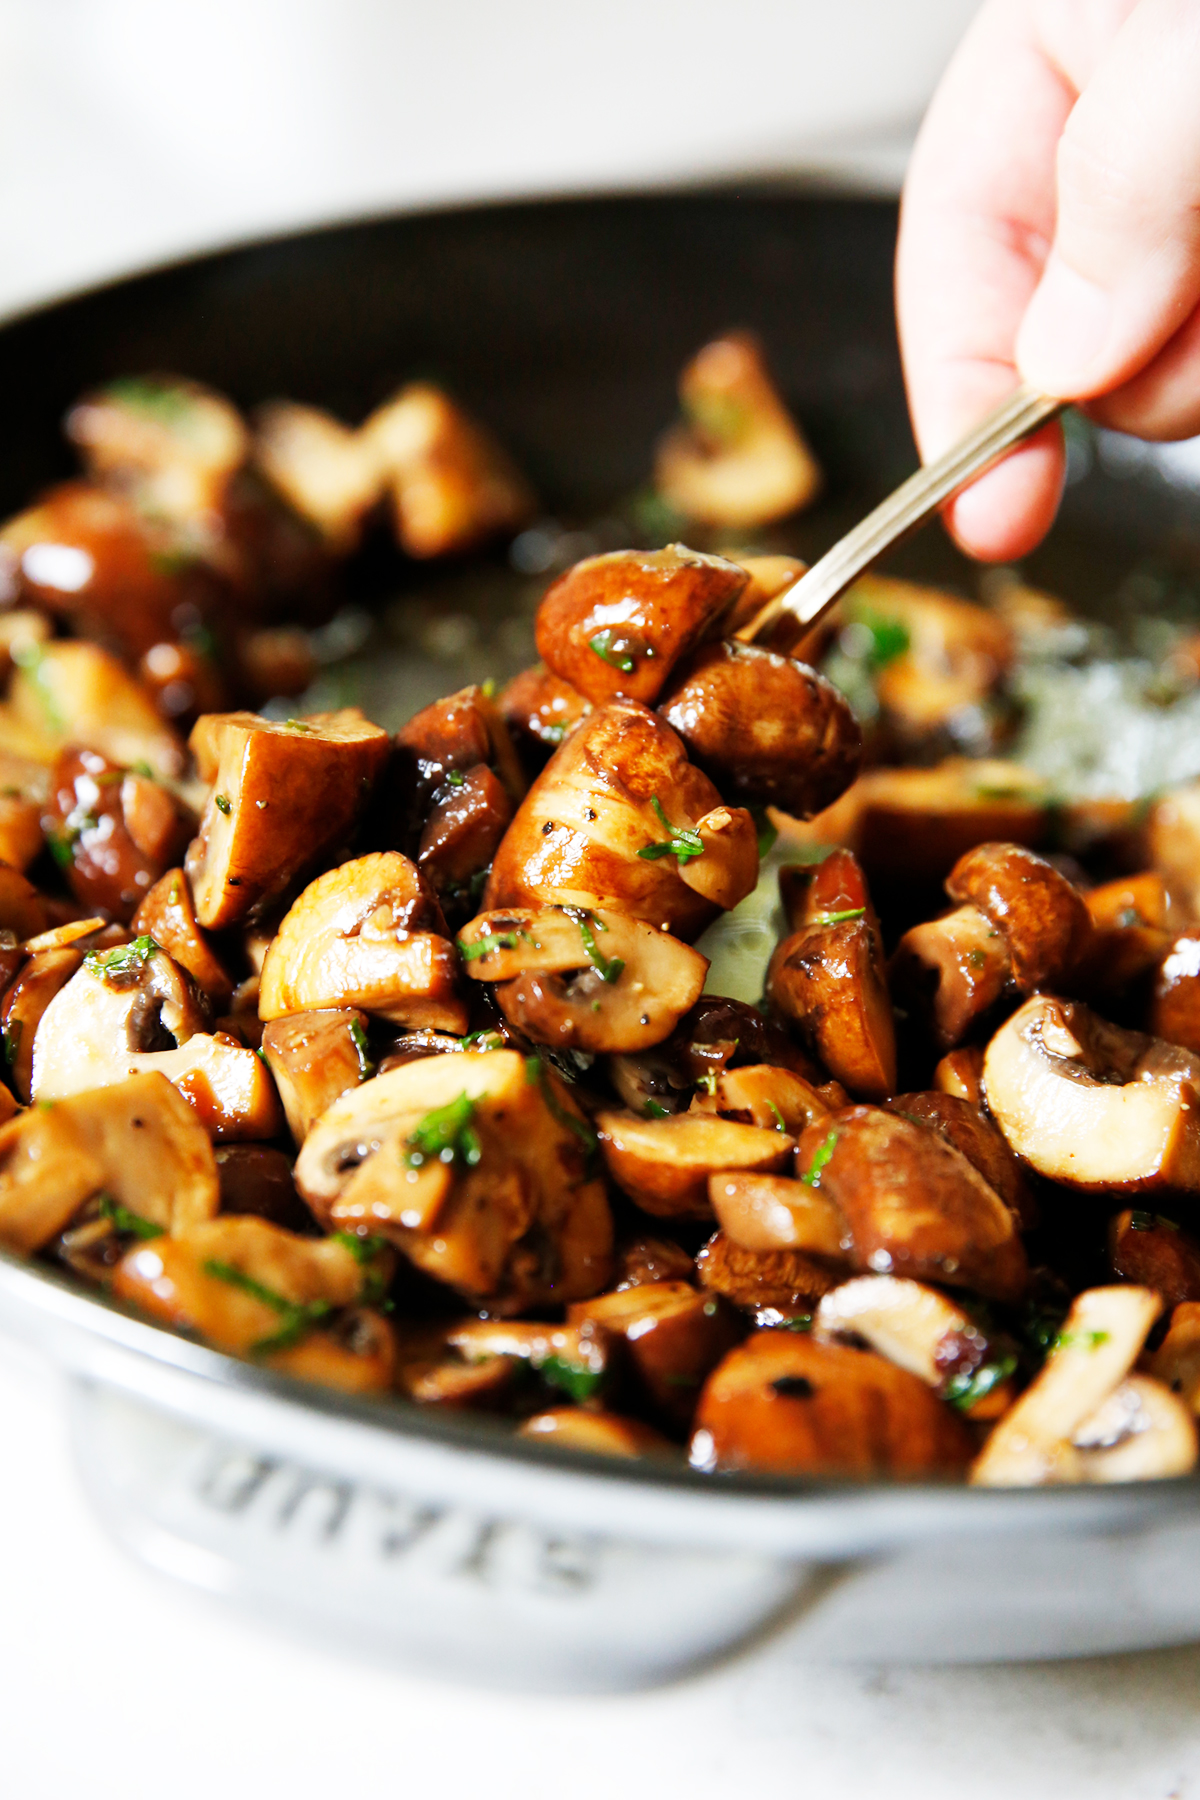 Mushroom recipe with garlic and herbs